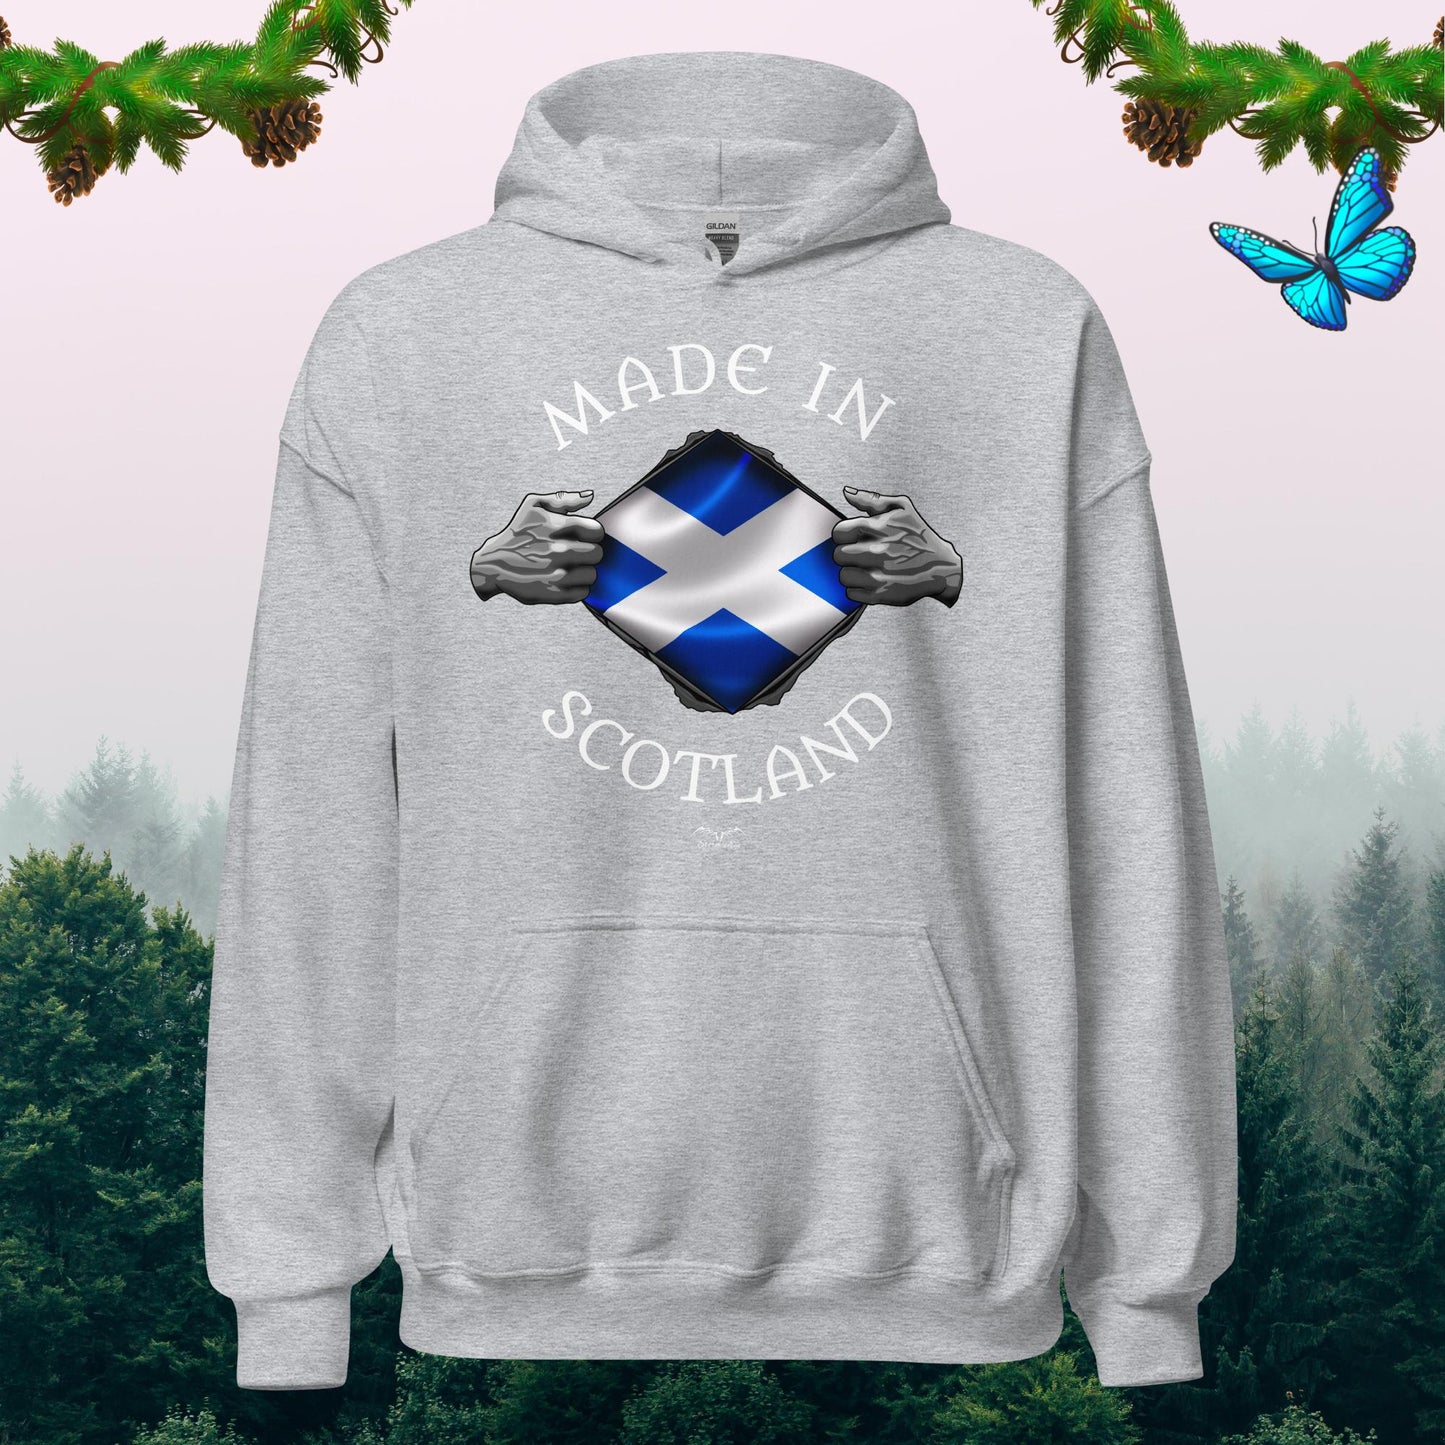 made in scotland scottish Hoodie, light grey by Stormseye Design